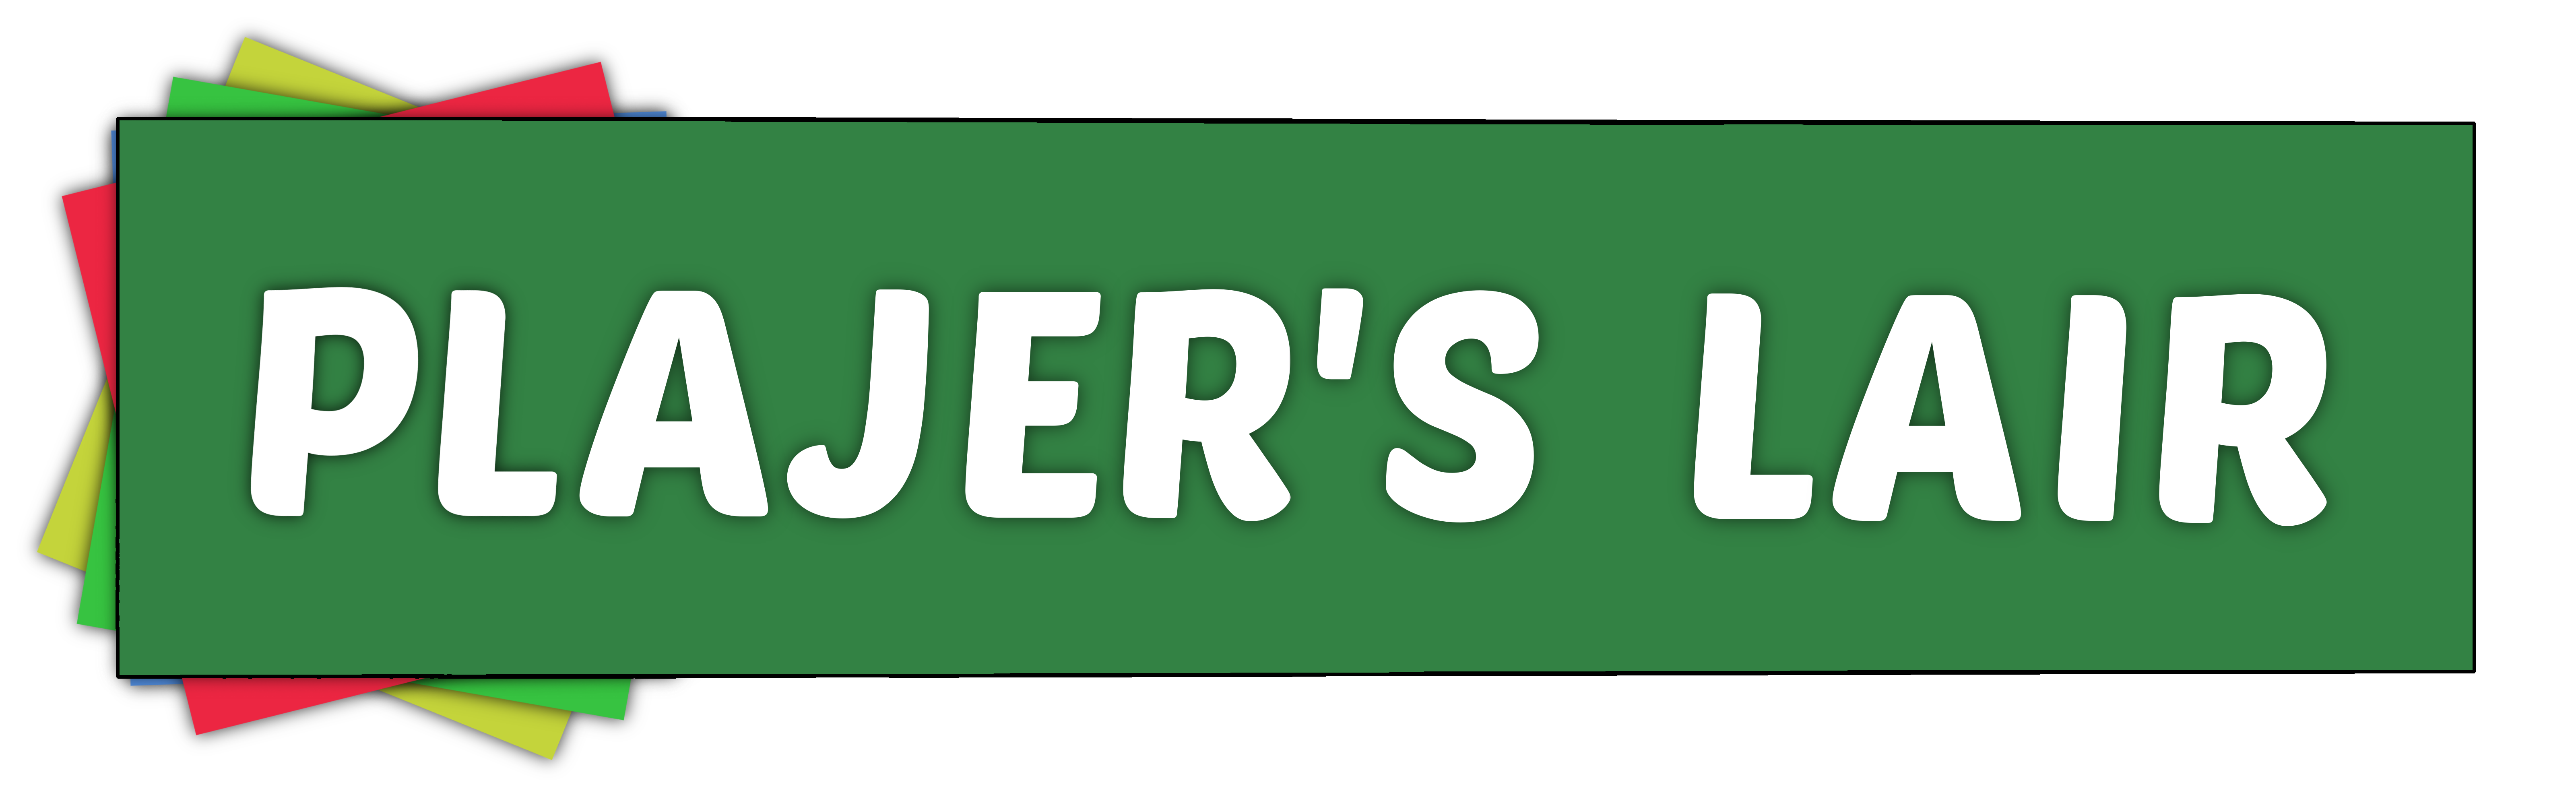 Plajer's Lair logo